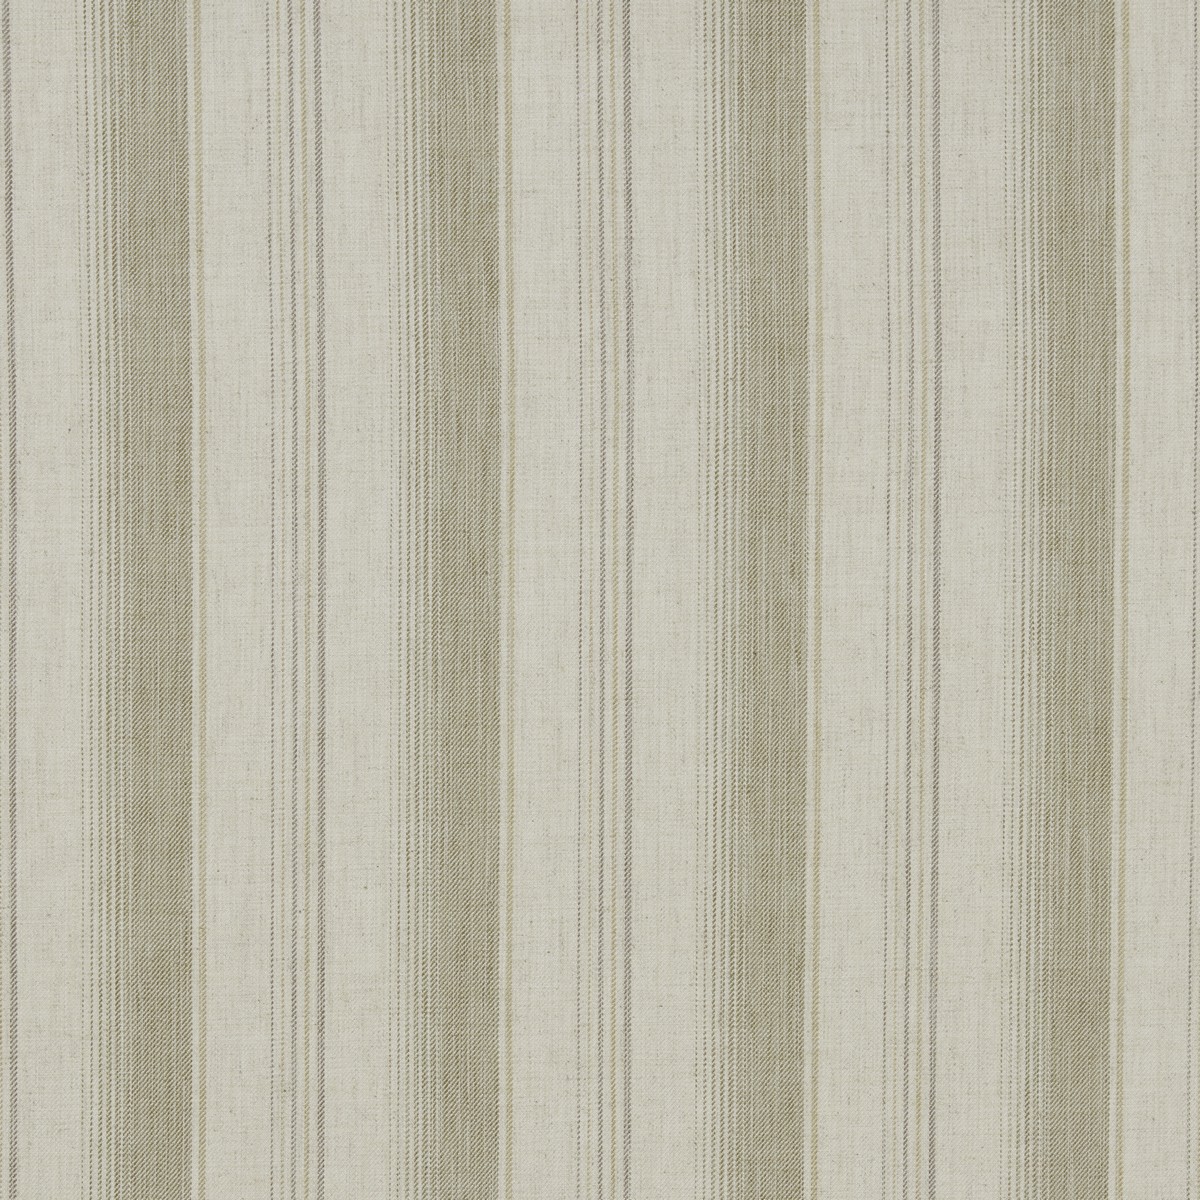 Sackville Stripe Fern Fabric by iLiv